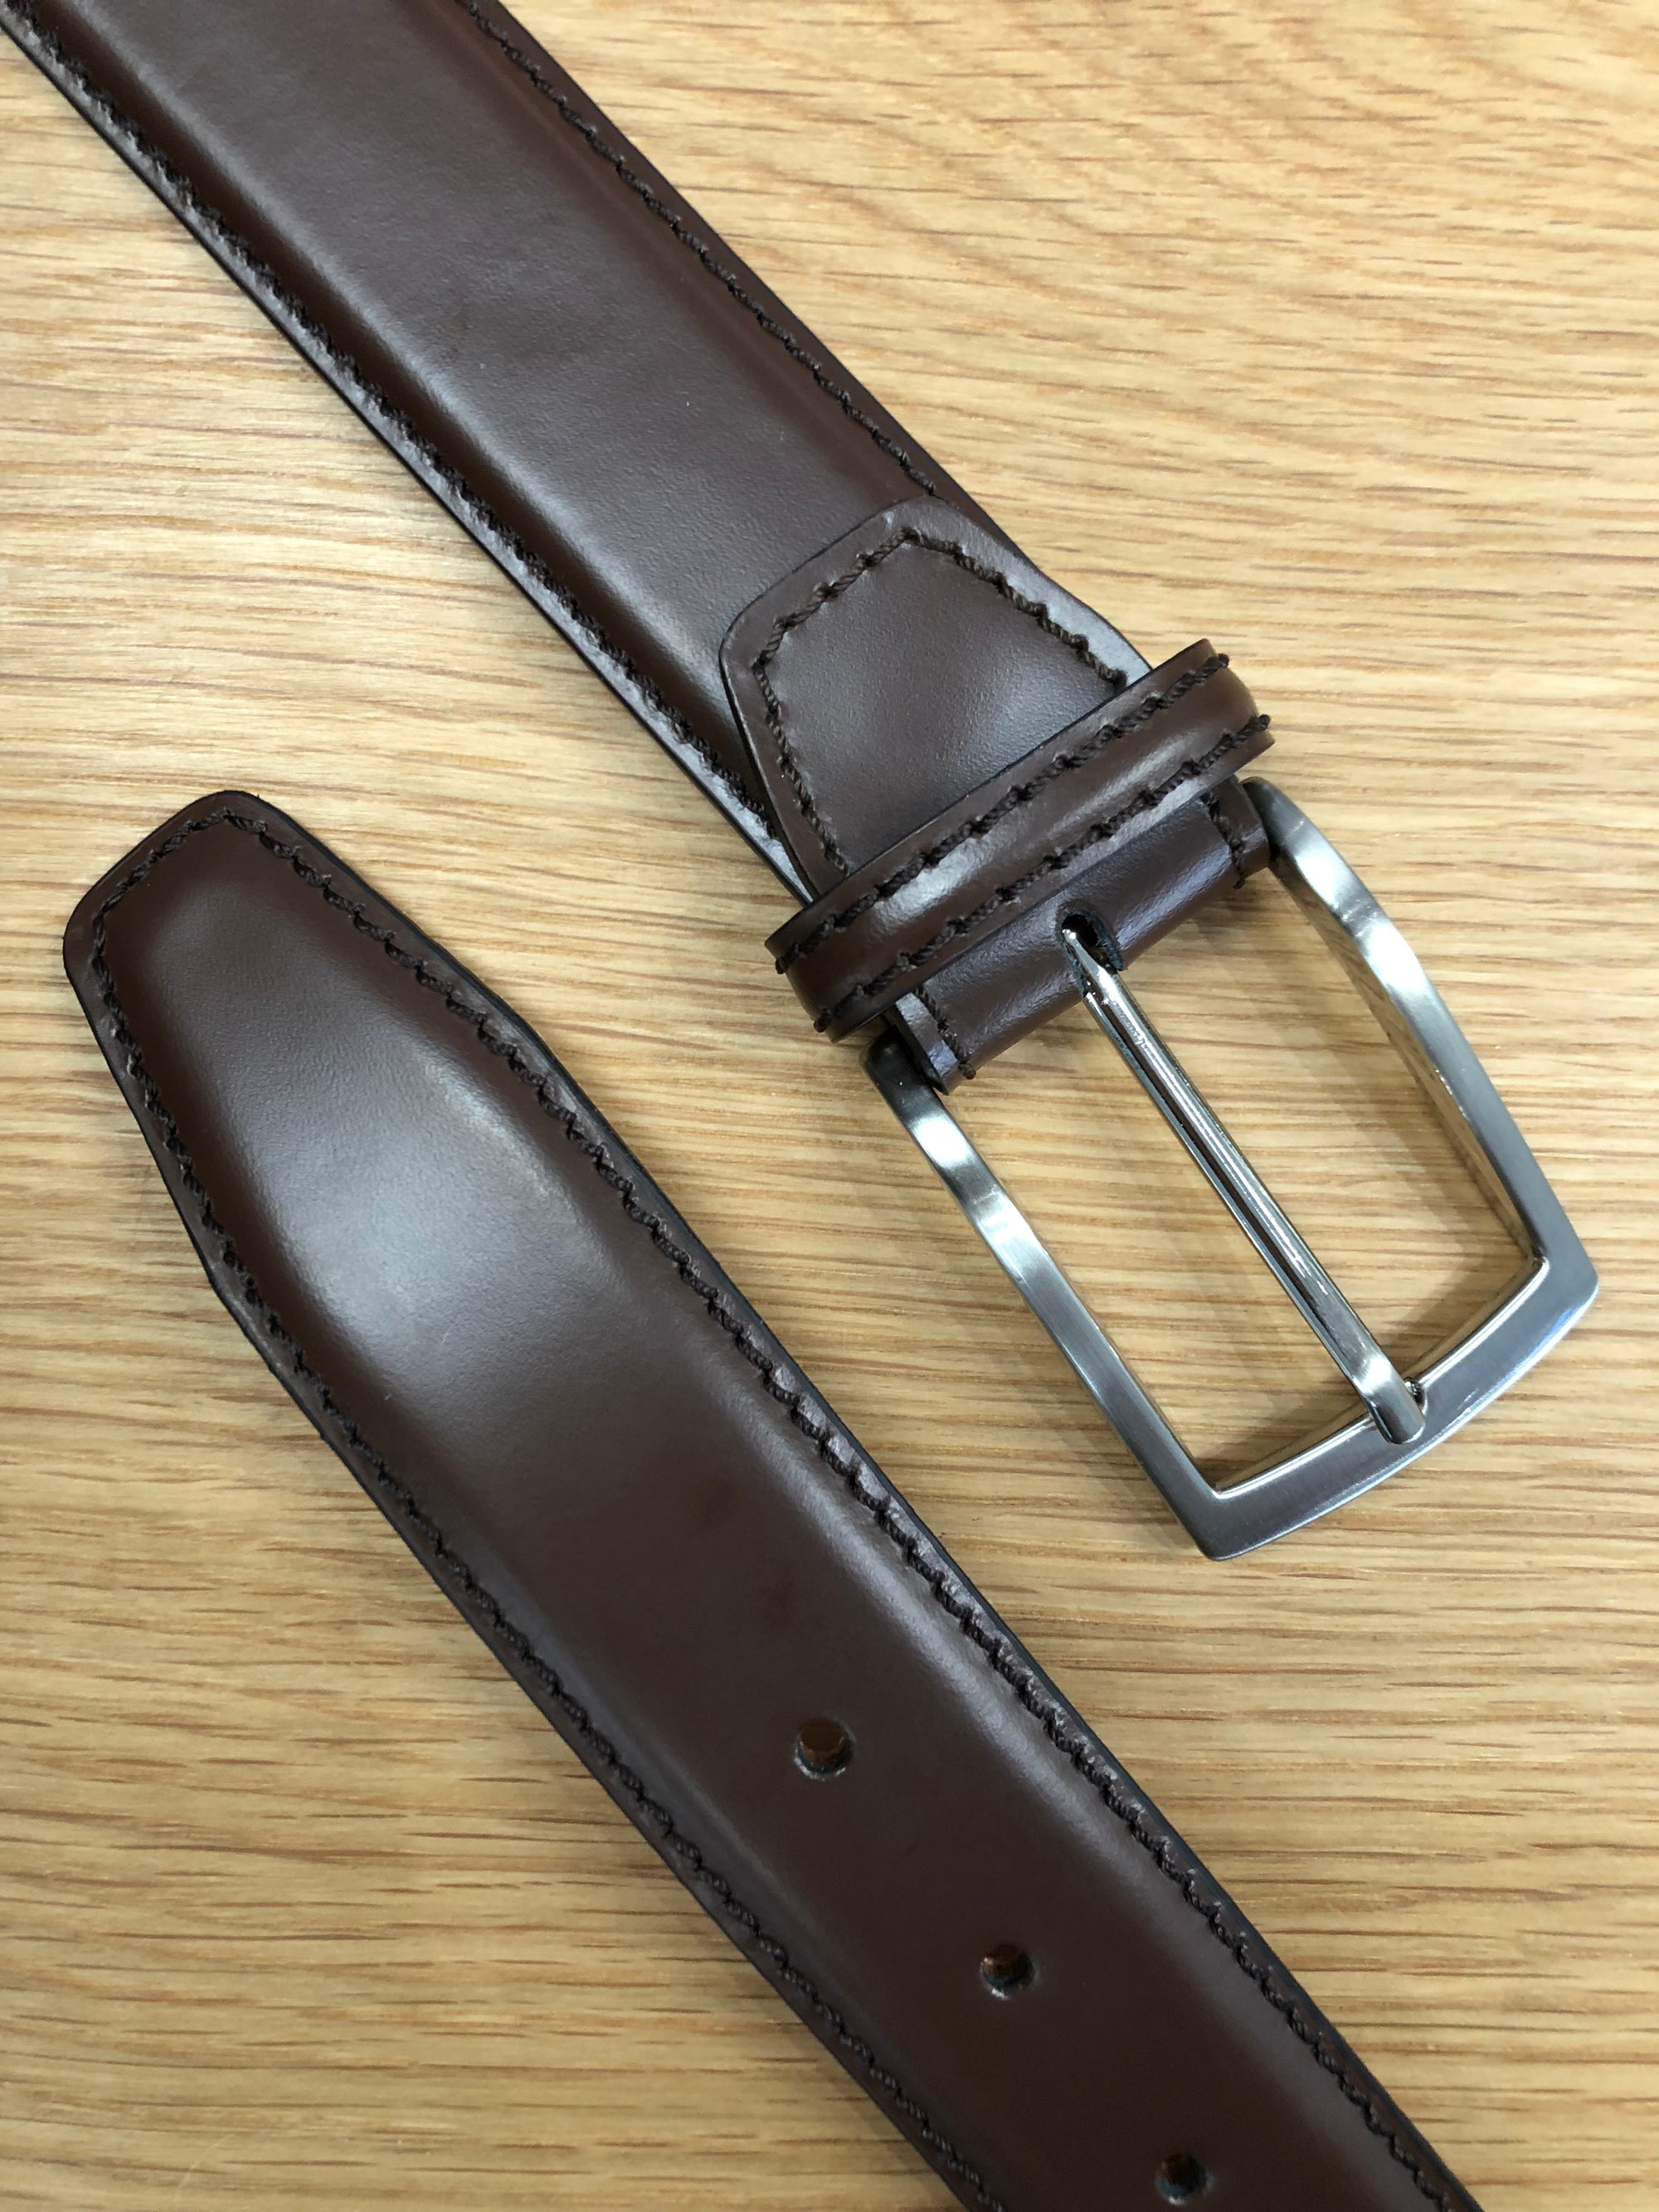 Classic Leather Belt / Black